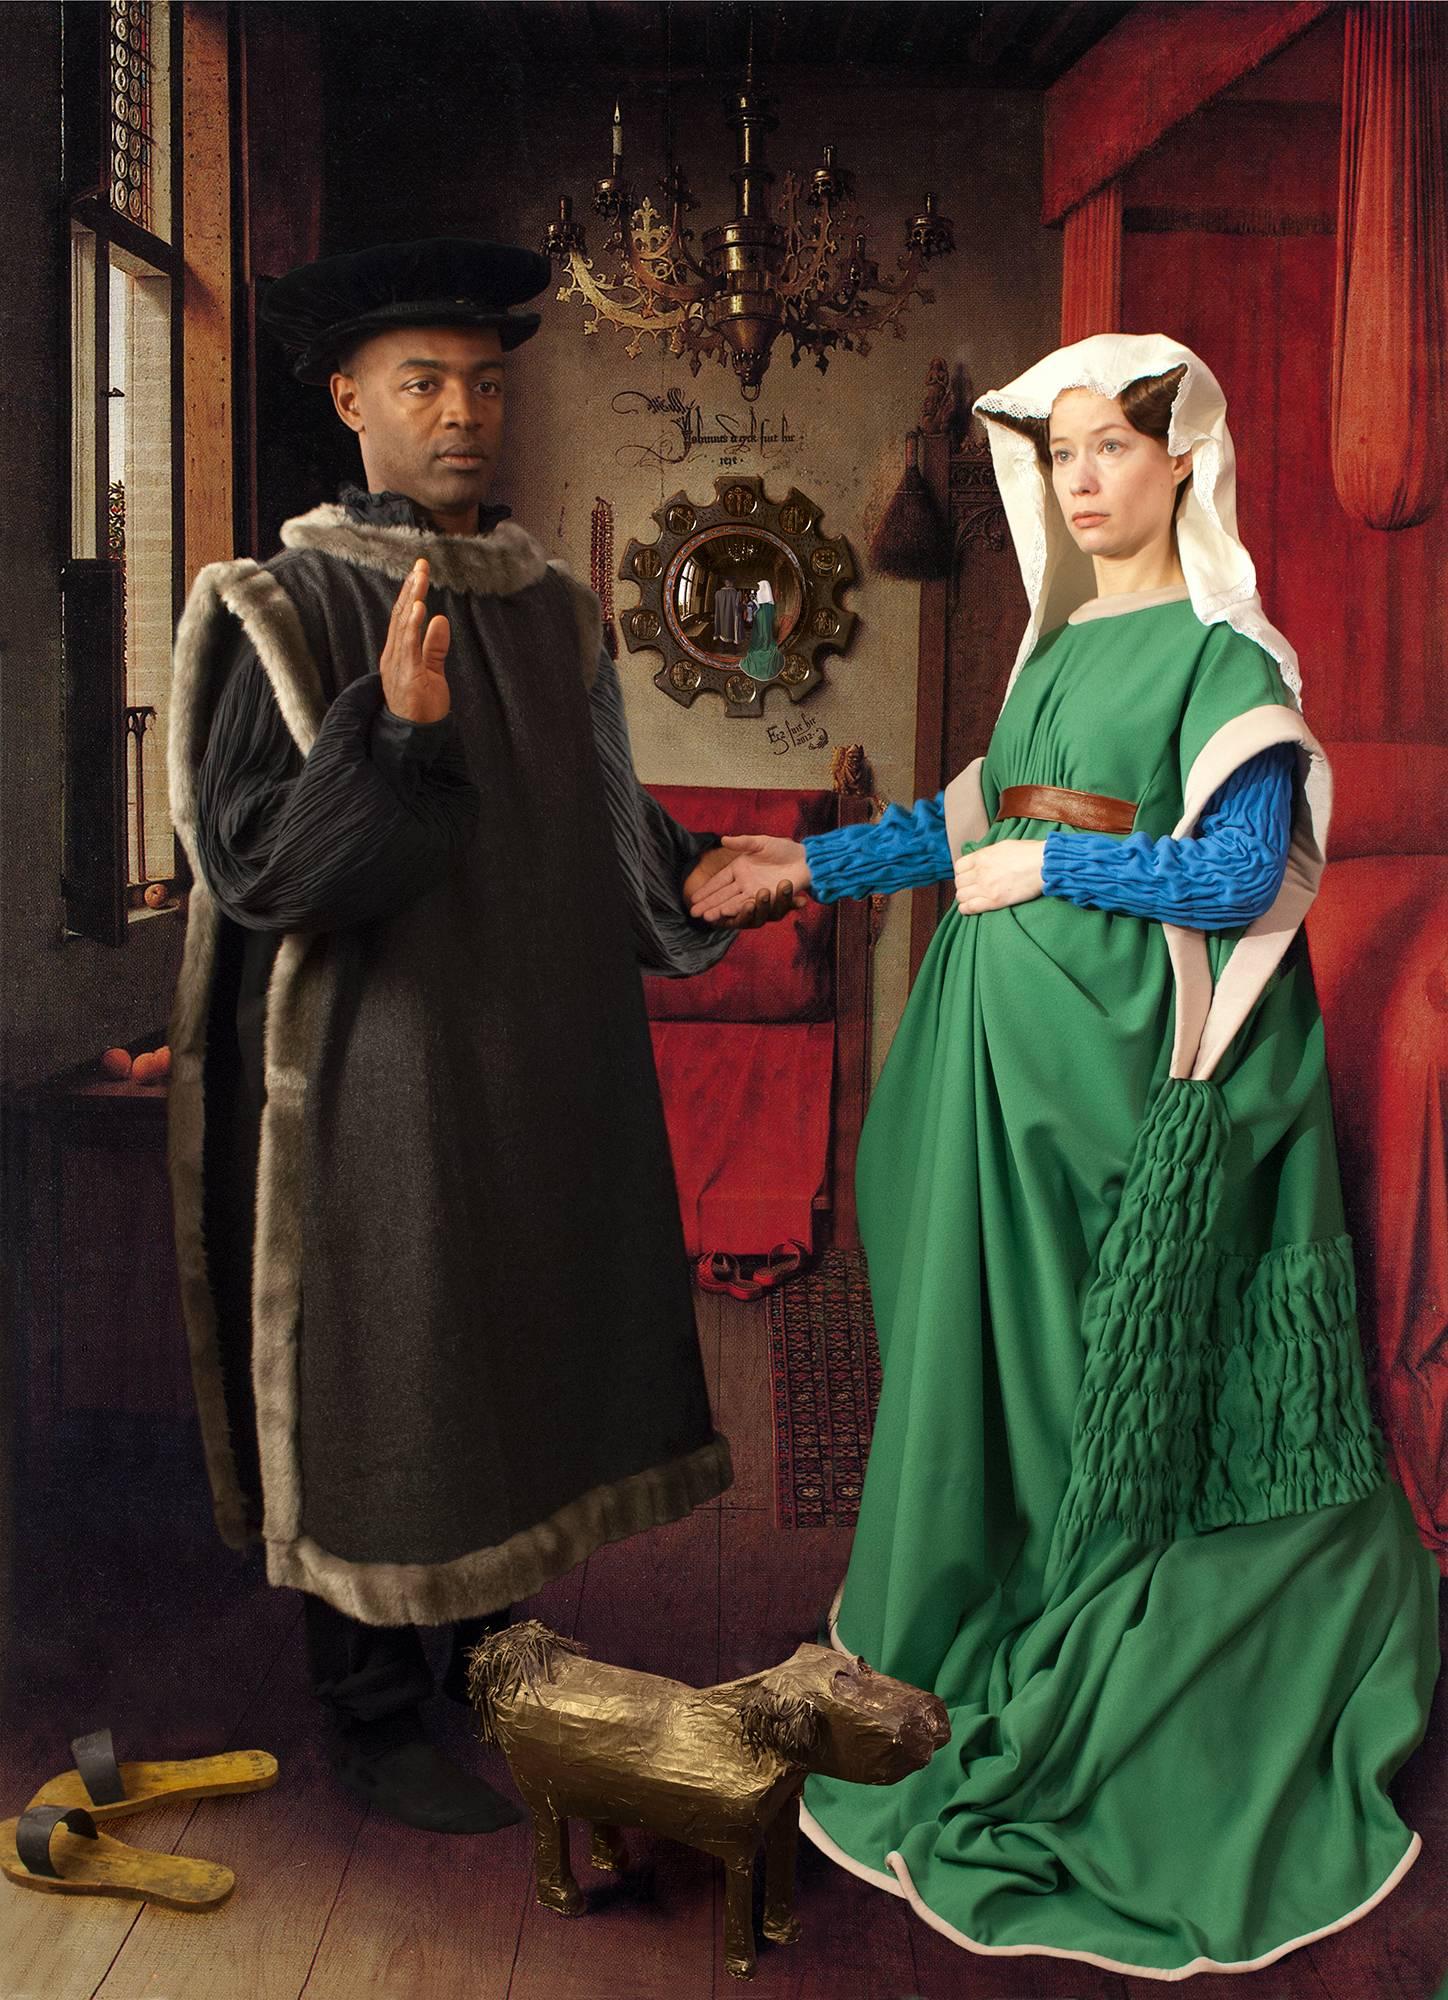 E2 - Kleinveld & Julien Figurative Photograph - Ode to Van Eyck's Arnolfini Marriage